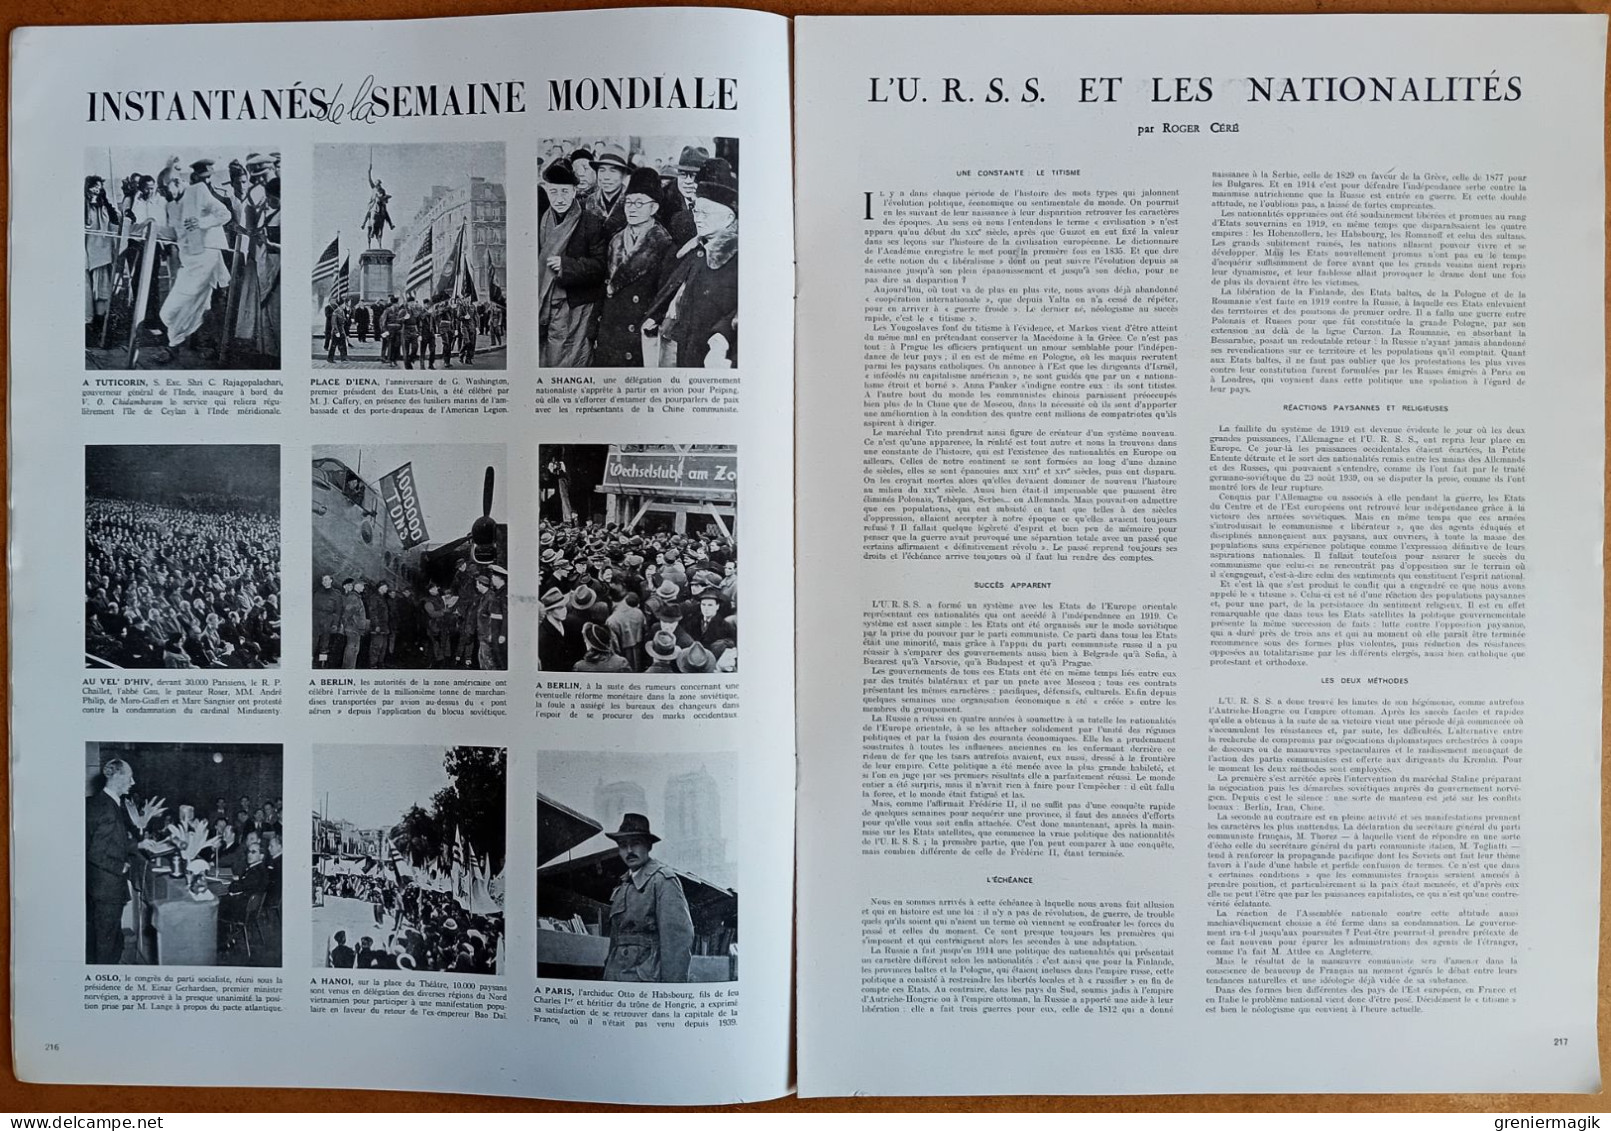 France Illustration N°177 05/03/1949 Népal/Ile Maurice/Joséphine Baker/Supervielle/Proust/Salon Arts Ménagers/Israël - Algemene Informatie